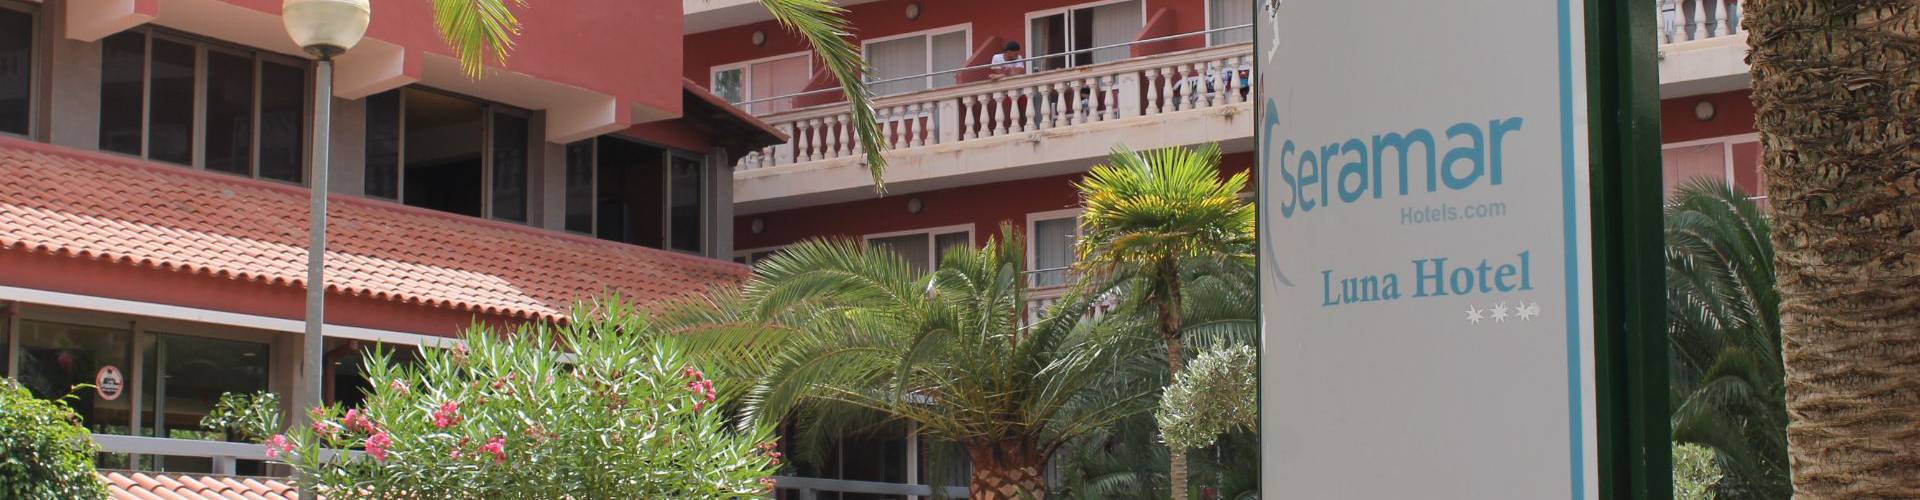 Seramar hotels - El Arenal - 